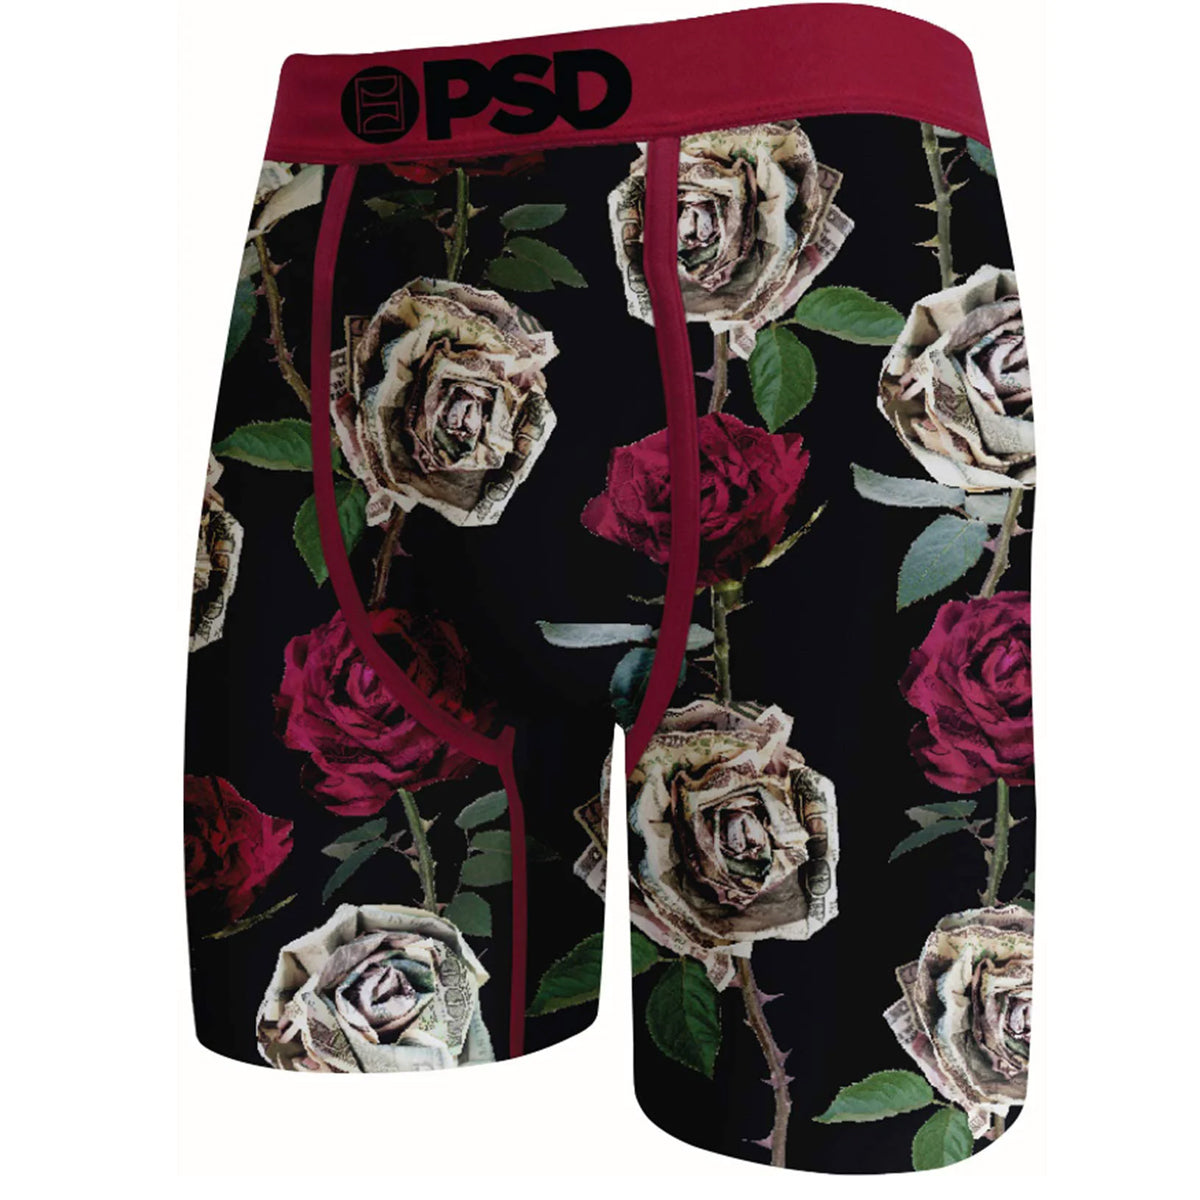 PSD 100 Roses Mix Boxer Men's Bottom Underwear